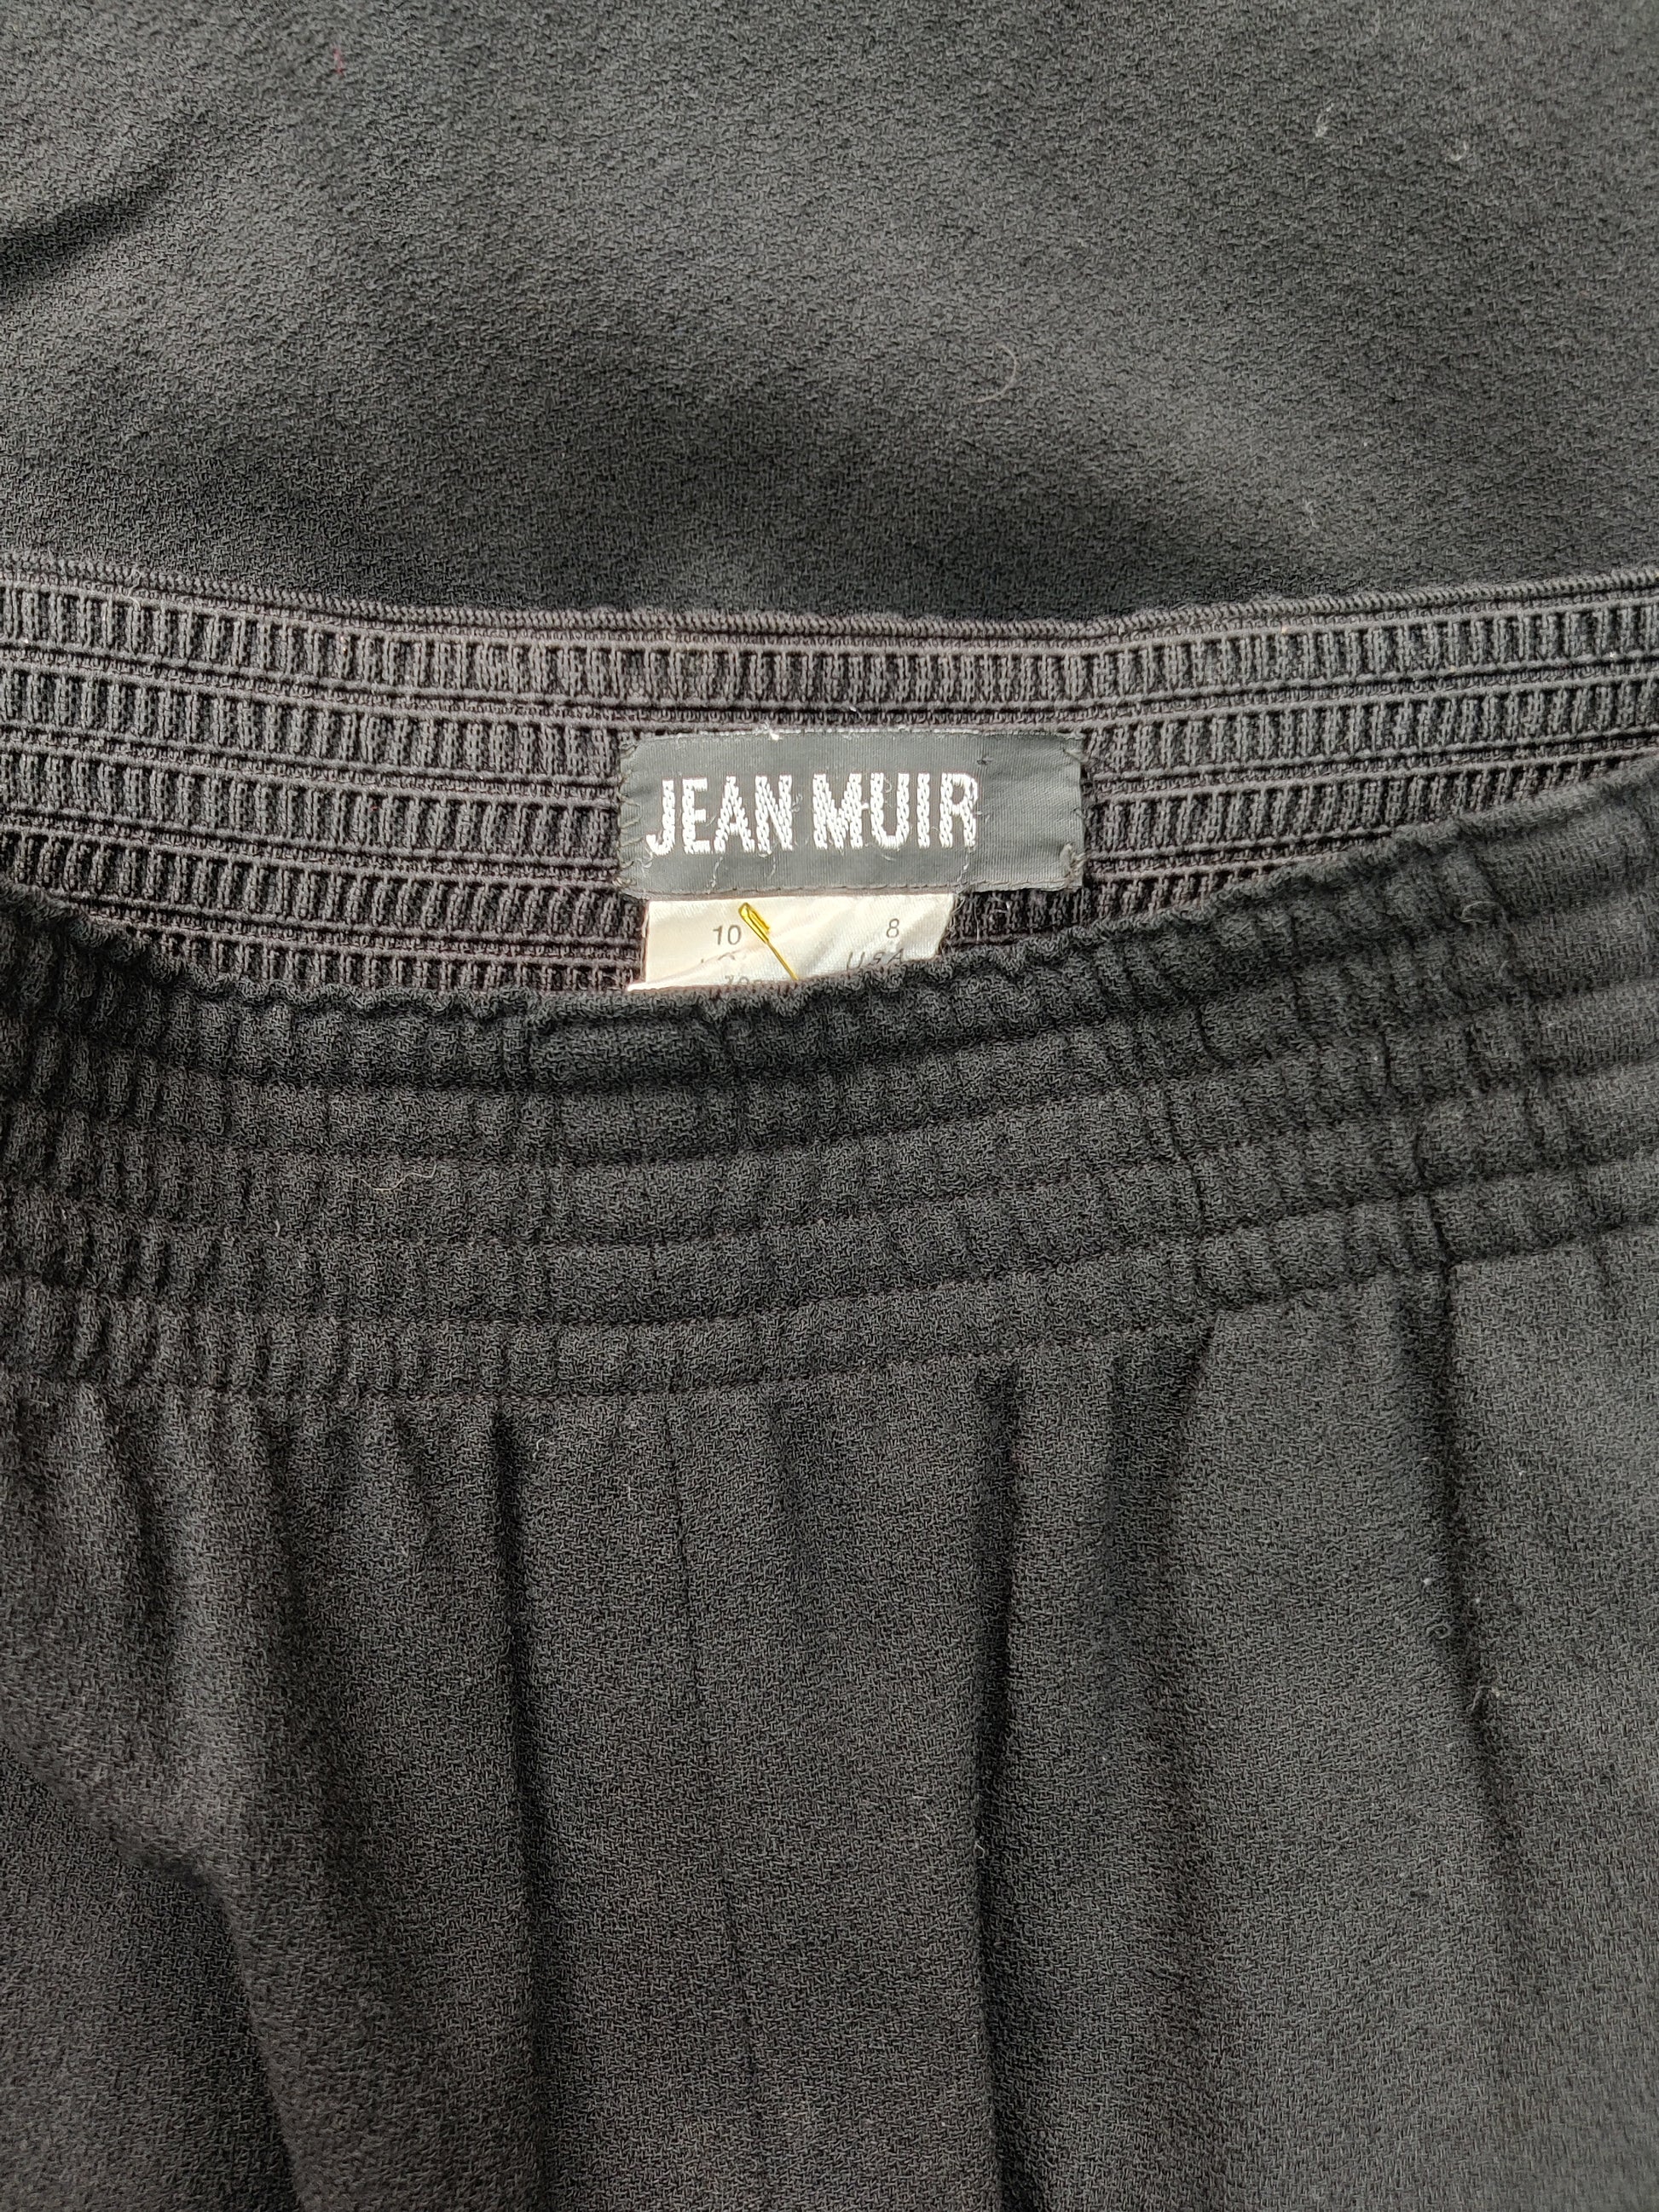 Jean Muir pencil skirt black.